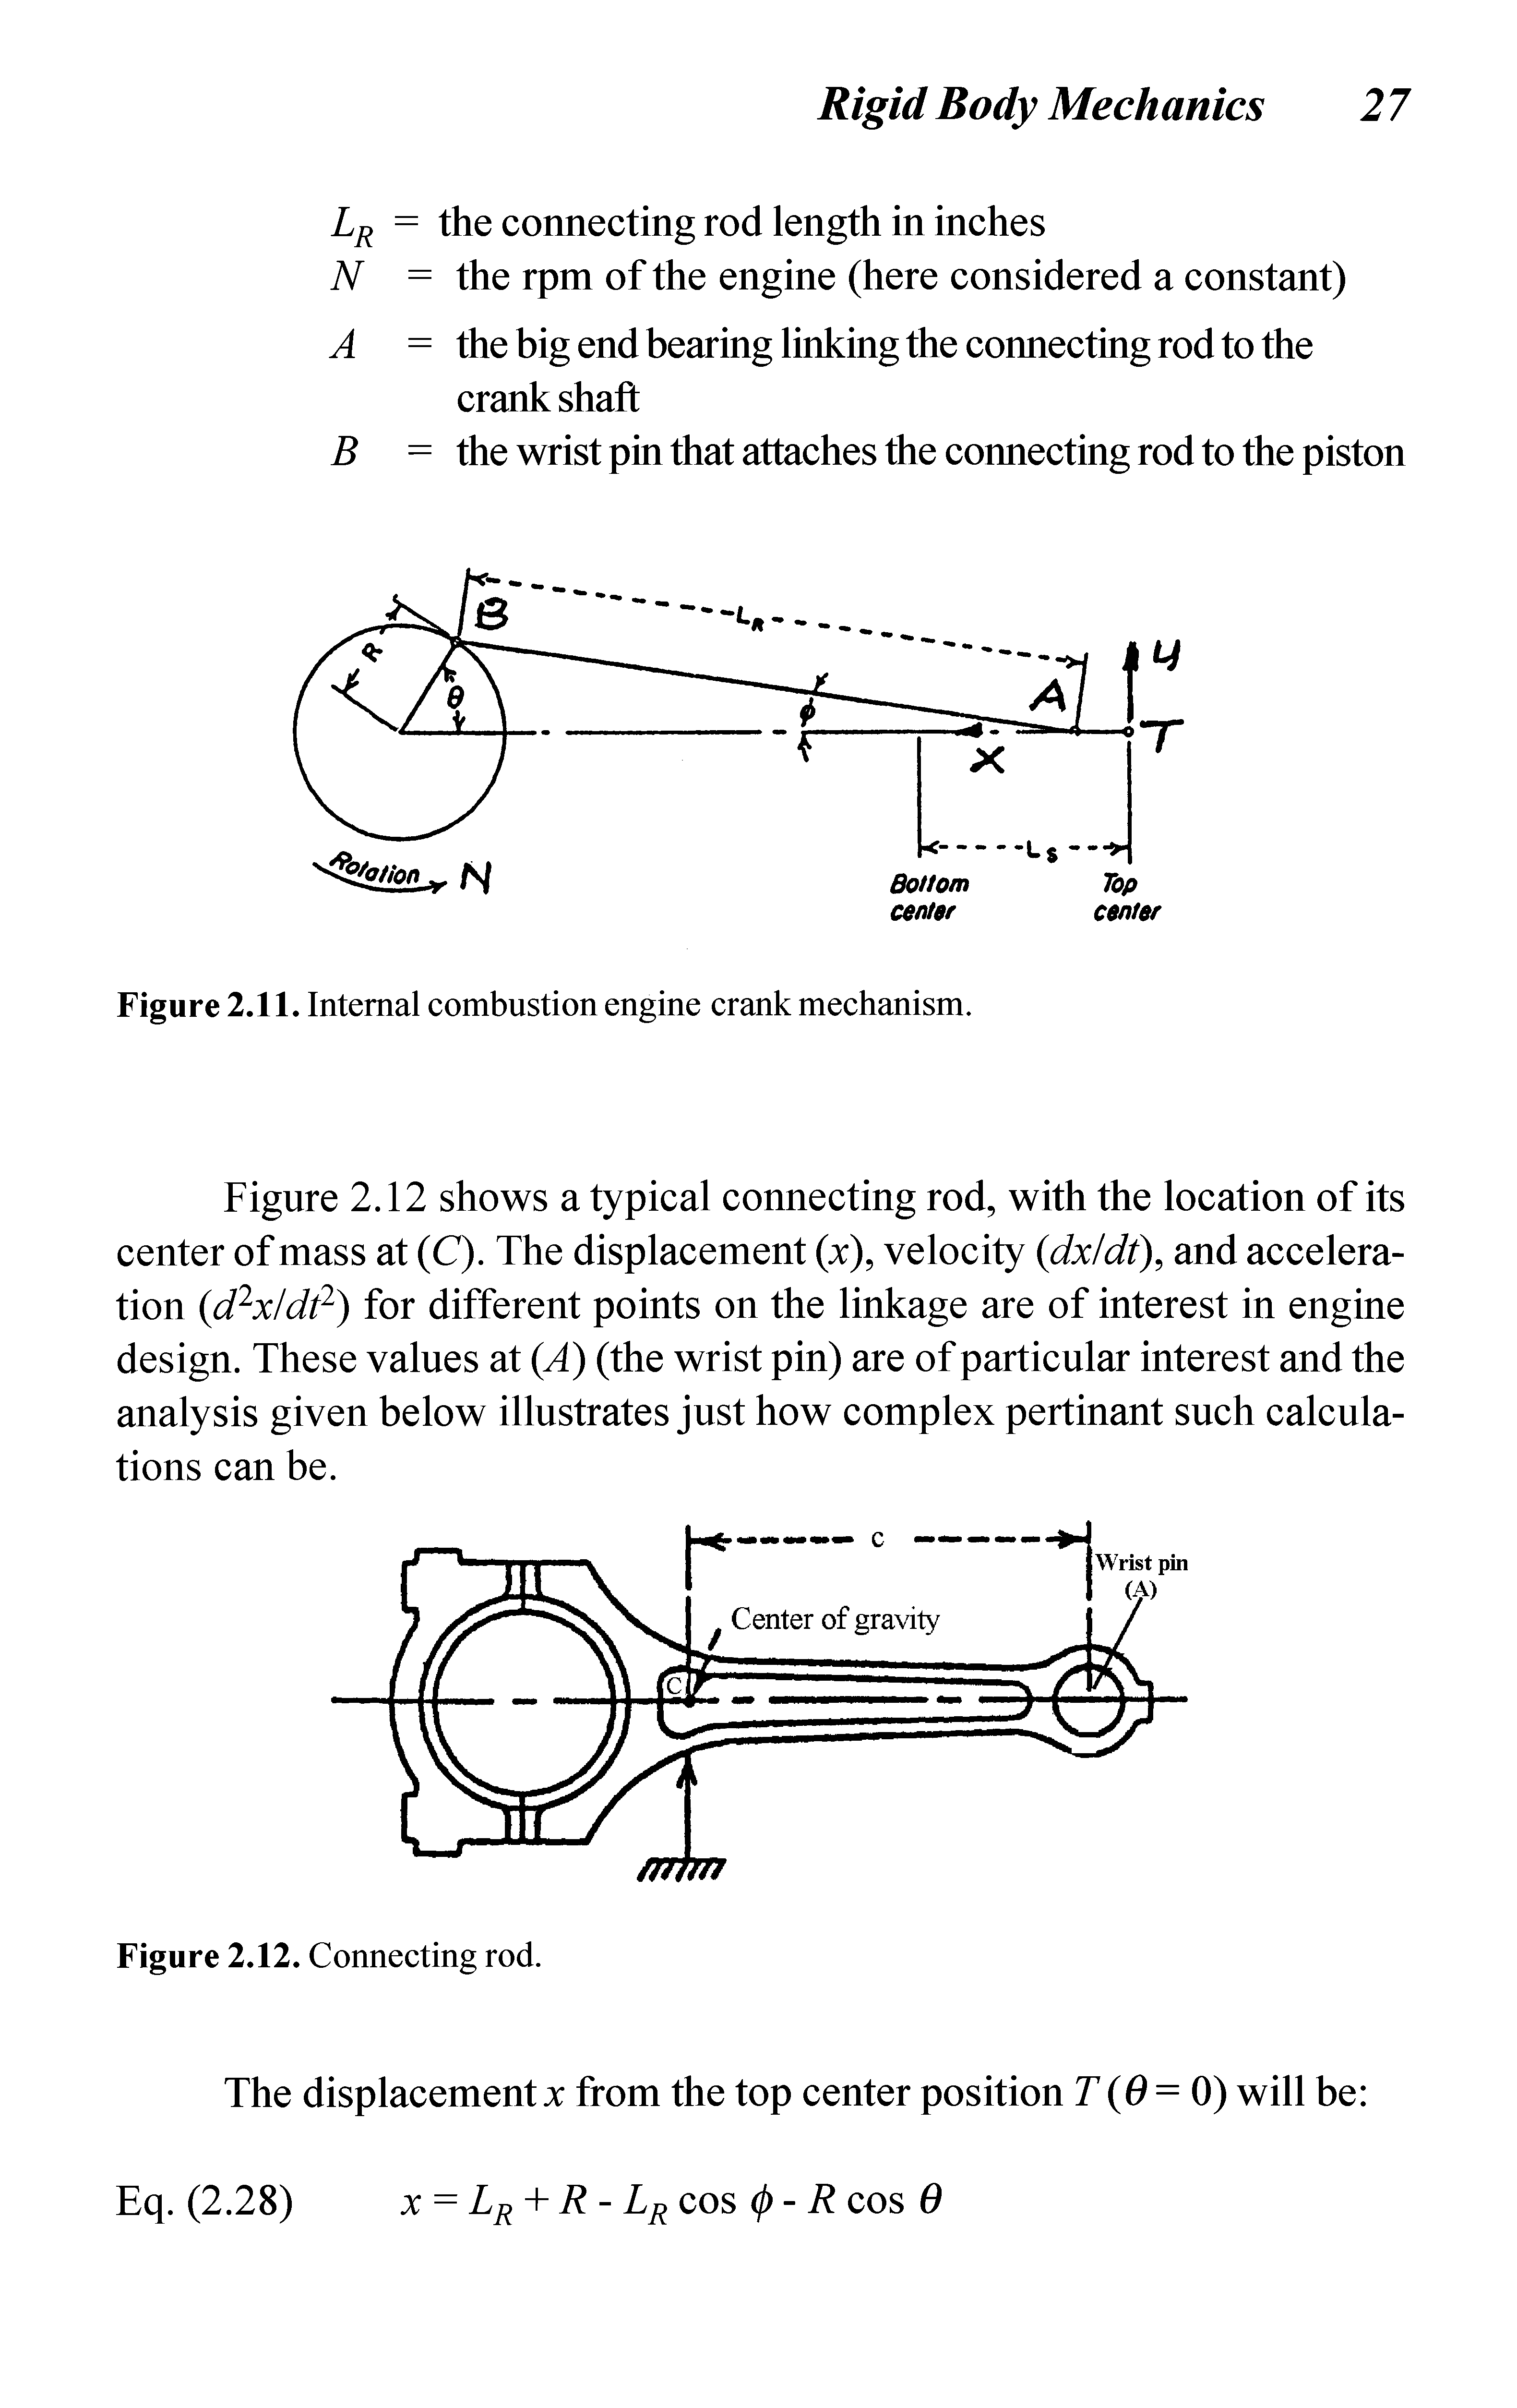 Figure 2.11. Internal combustion engine crank mechanism.